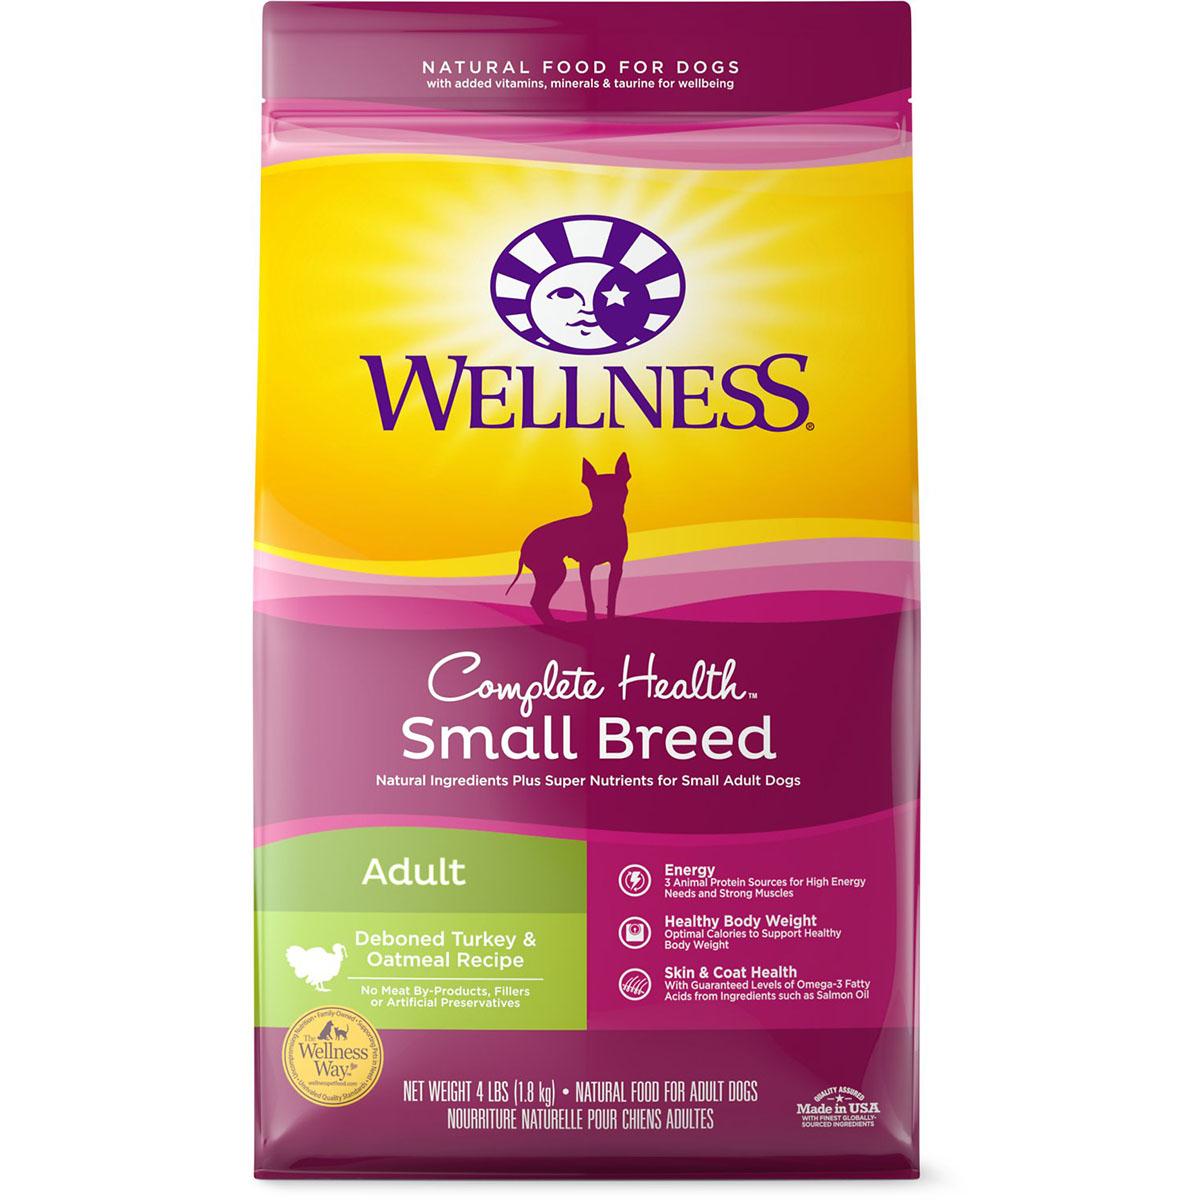 Wellness Complete Health Small Breed Adult Dry Dog Food - Deboned Turkey & Oatmeal Recipe